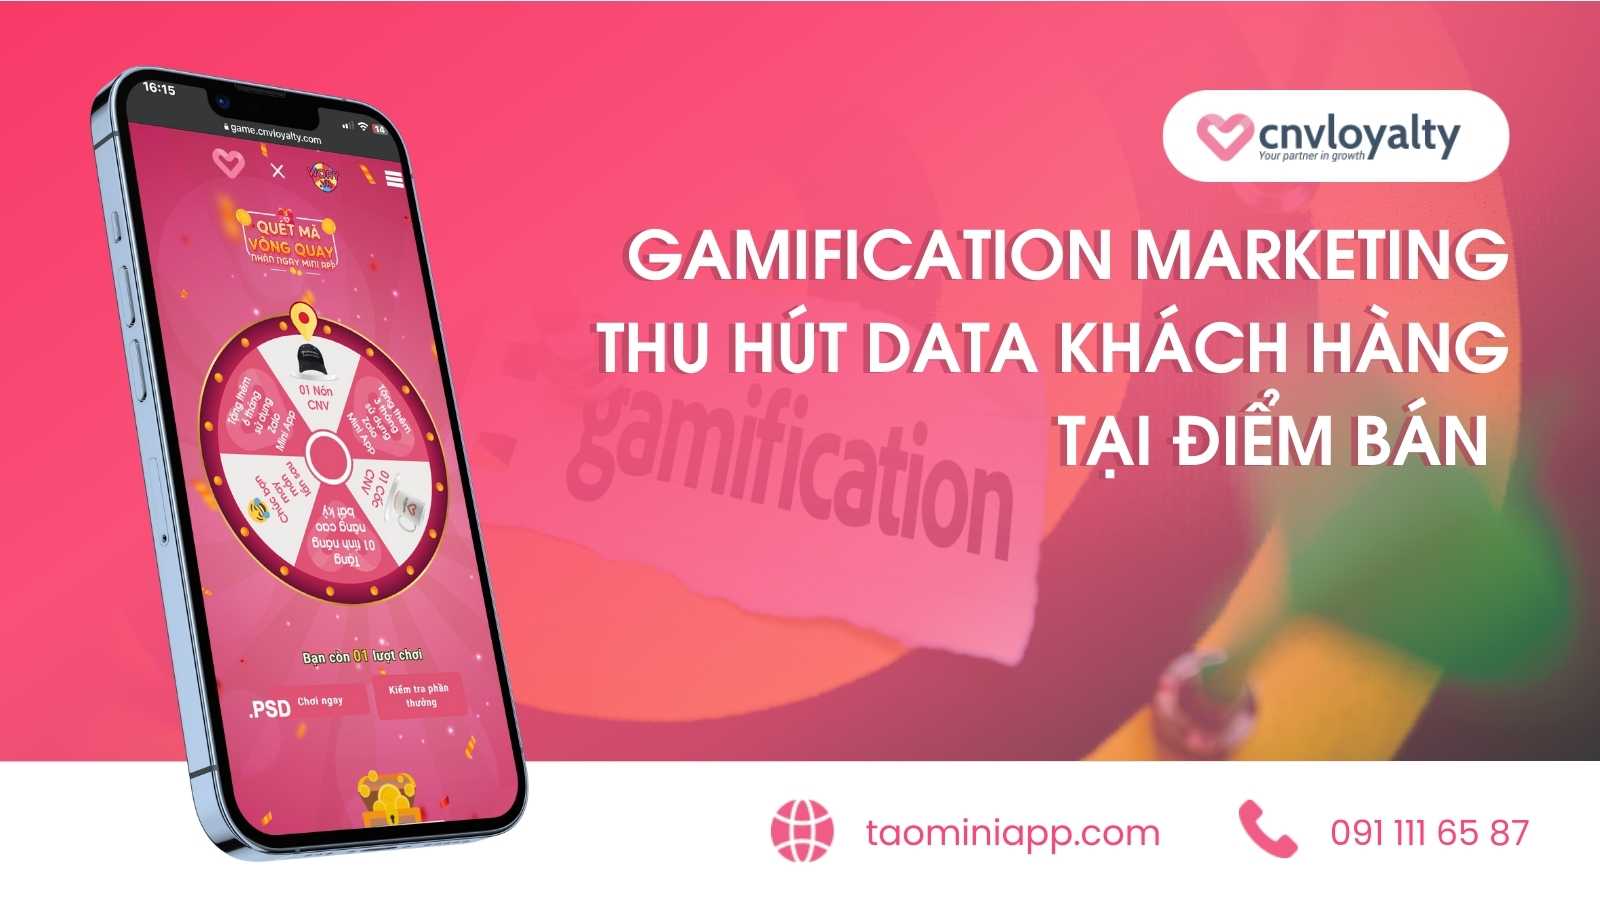 gamification marketing thu hut data khach hang tai diem ban